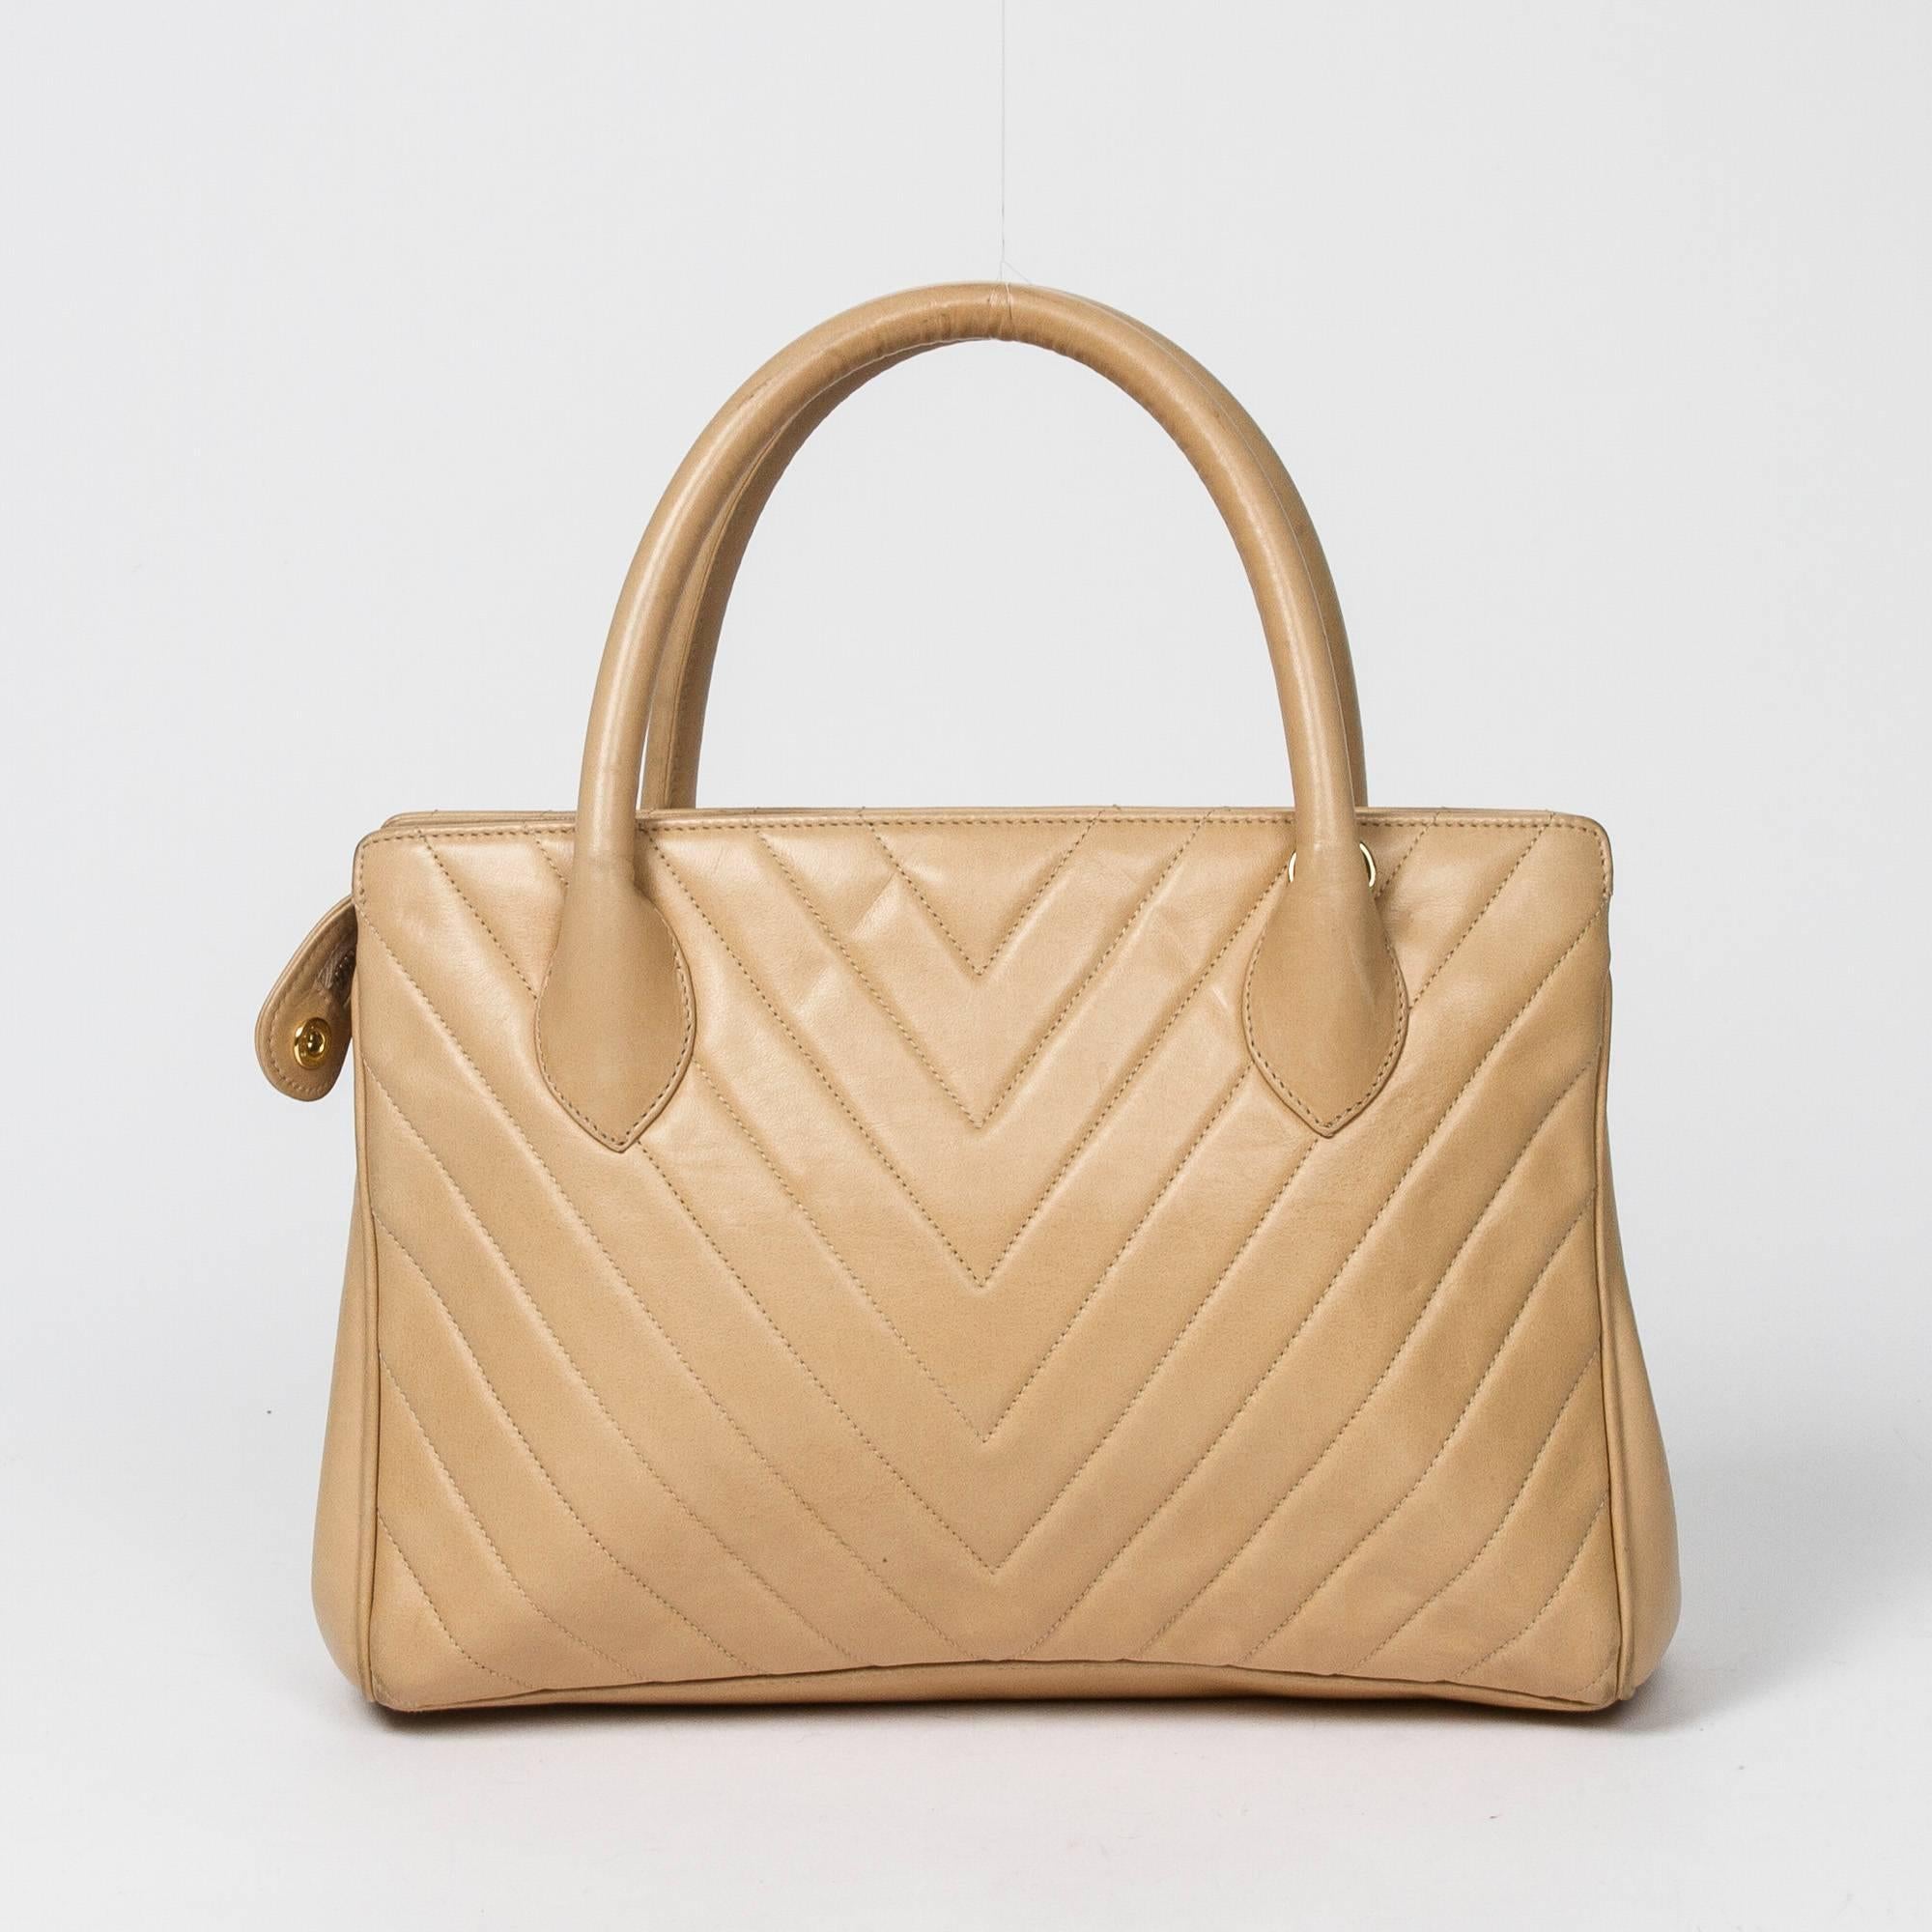 Chanel Handbag Beige Leather  1